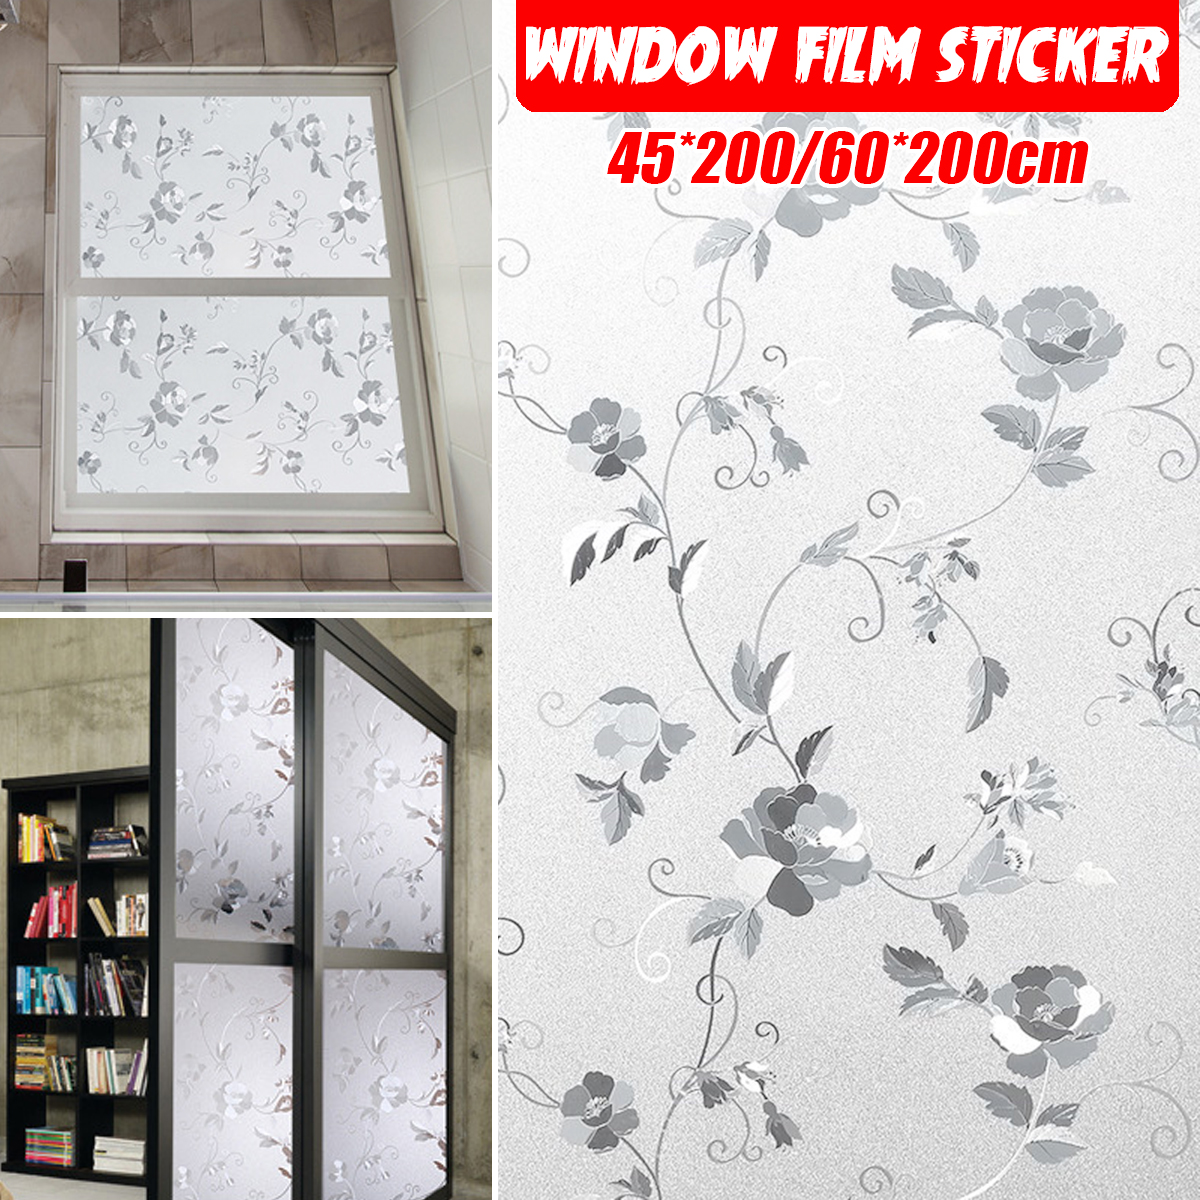 Window-Film-Sticker-Glue-free-Static-Cling-Glass-DIY-Home-Decor-Peony-Flower-1716010-1